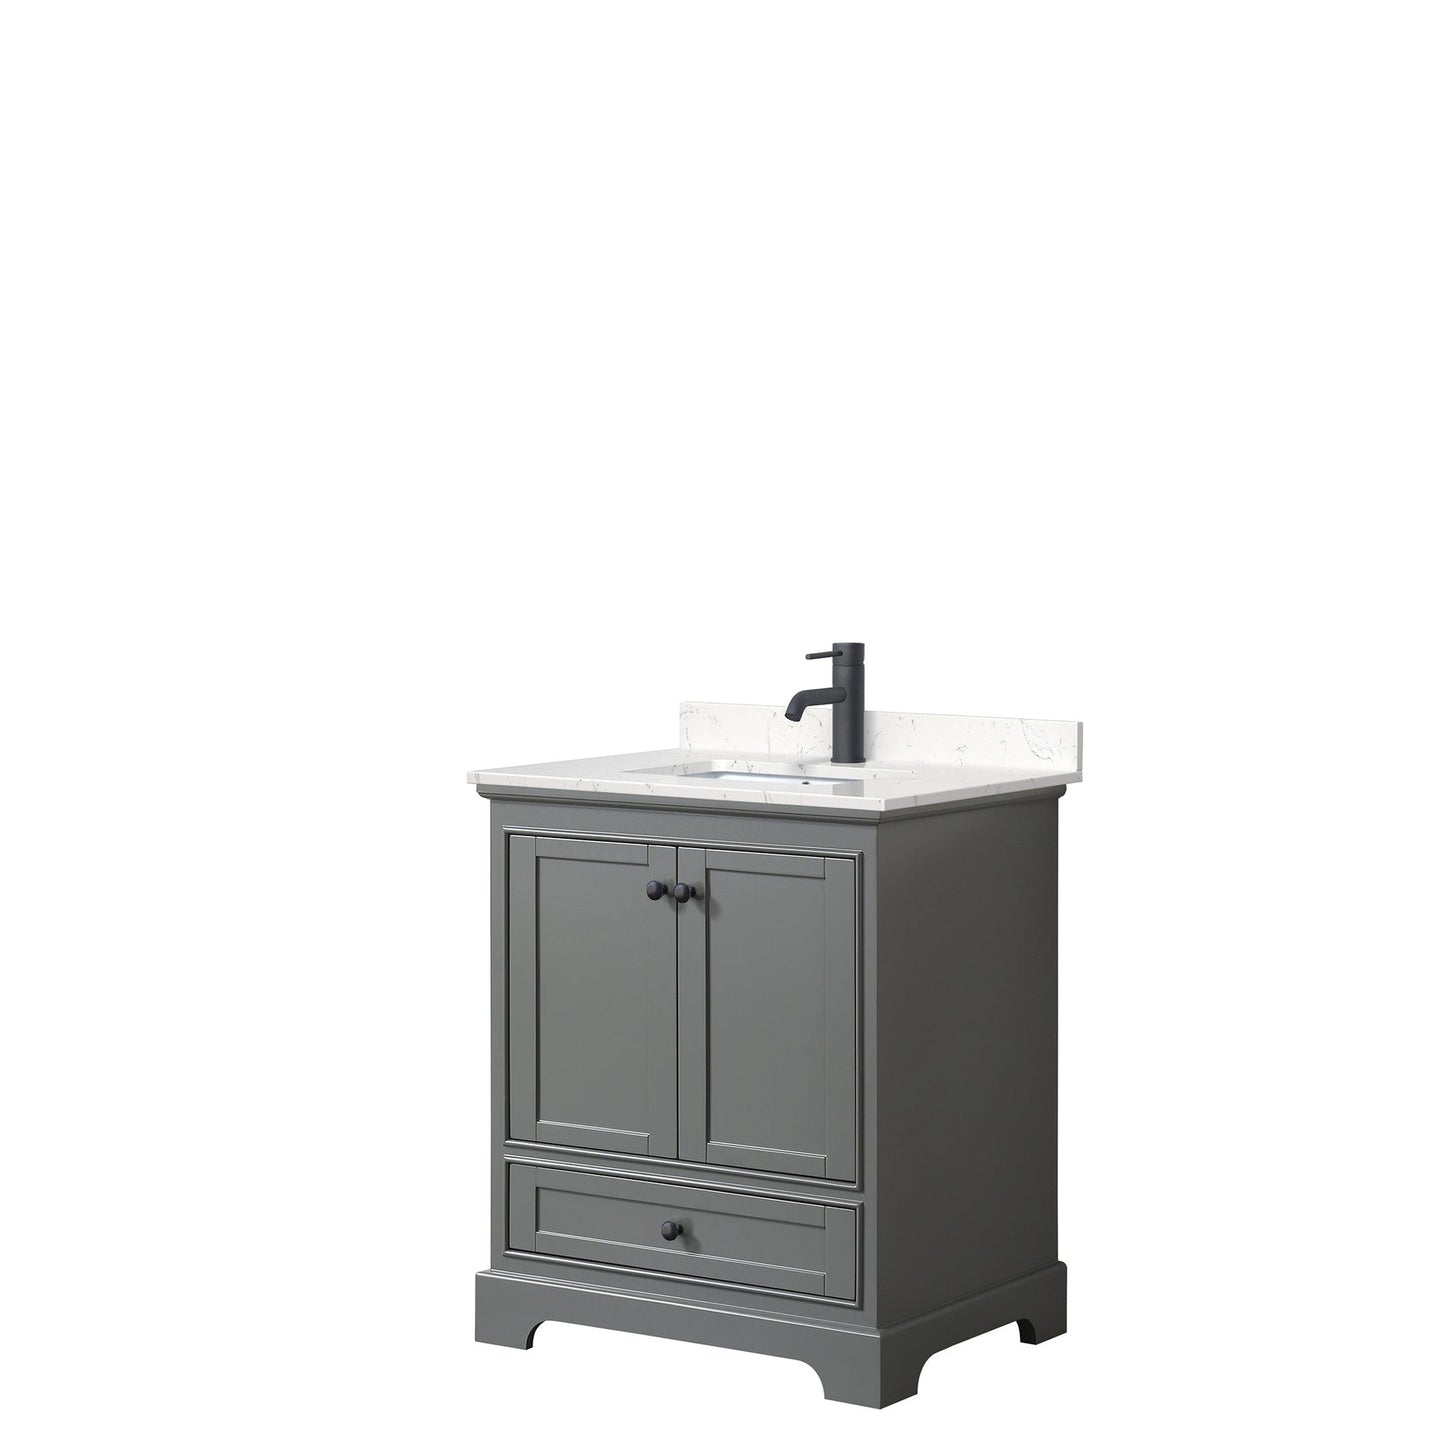 Deborah 30" Single Bathroom Vanity in Dark Gray, Carrara Cultured Marble Countertop, Undermount Square Sink, Matte Black Trim